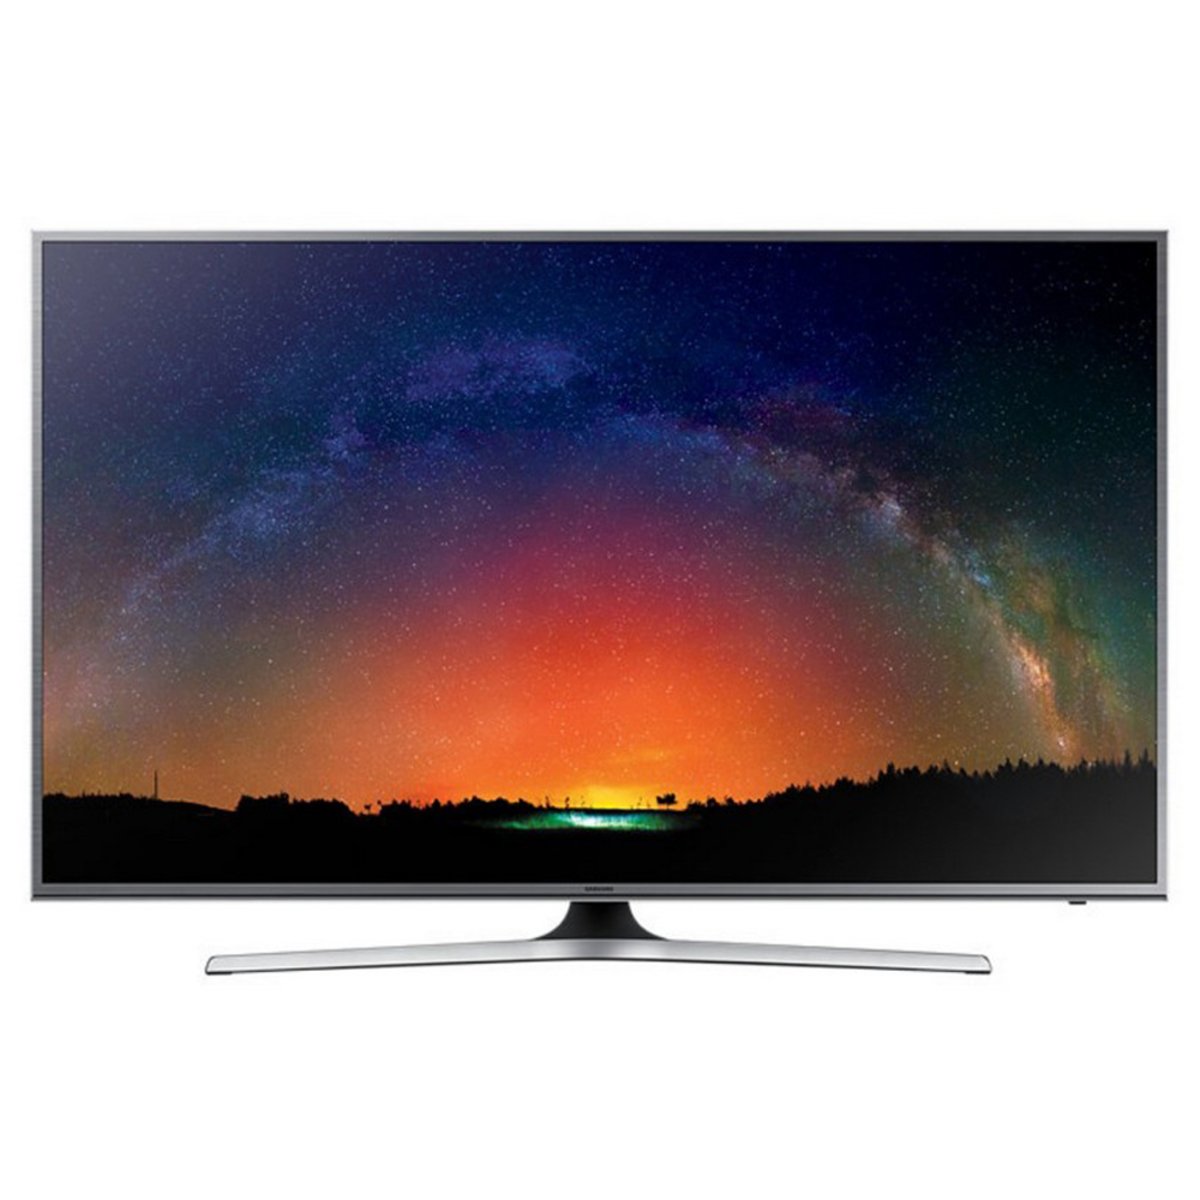 Samsung Ultra HD Smart LED TV 60JS7200 60inch